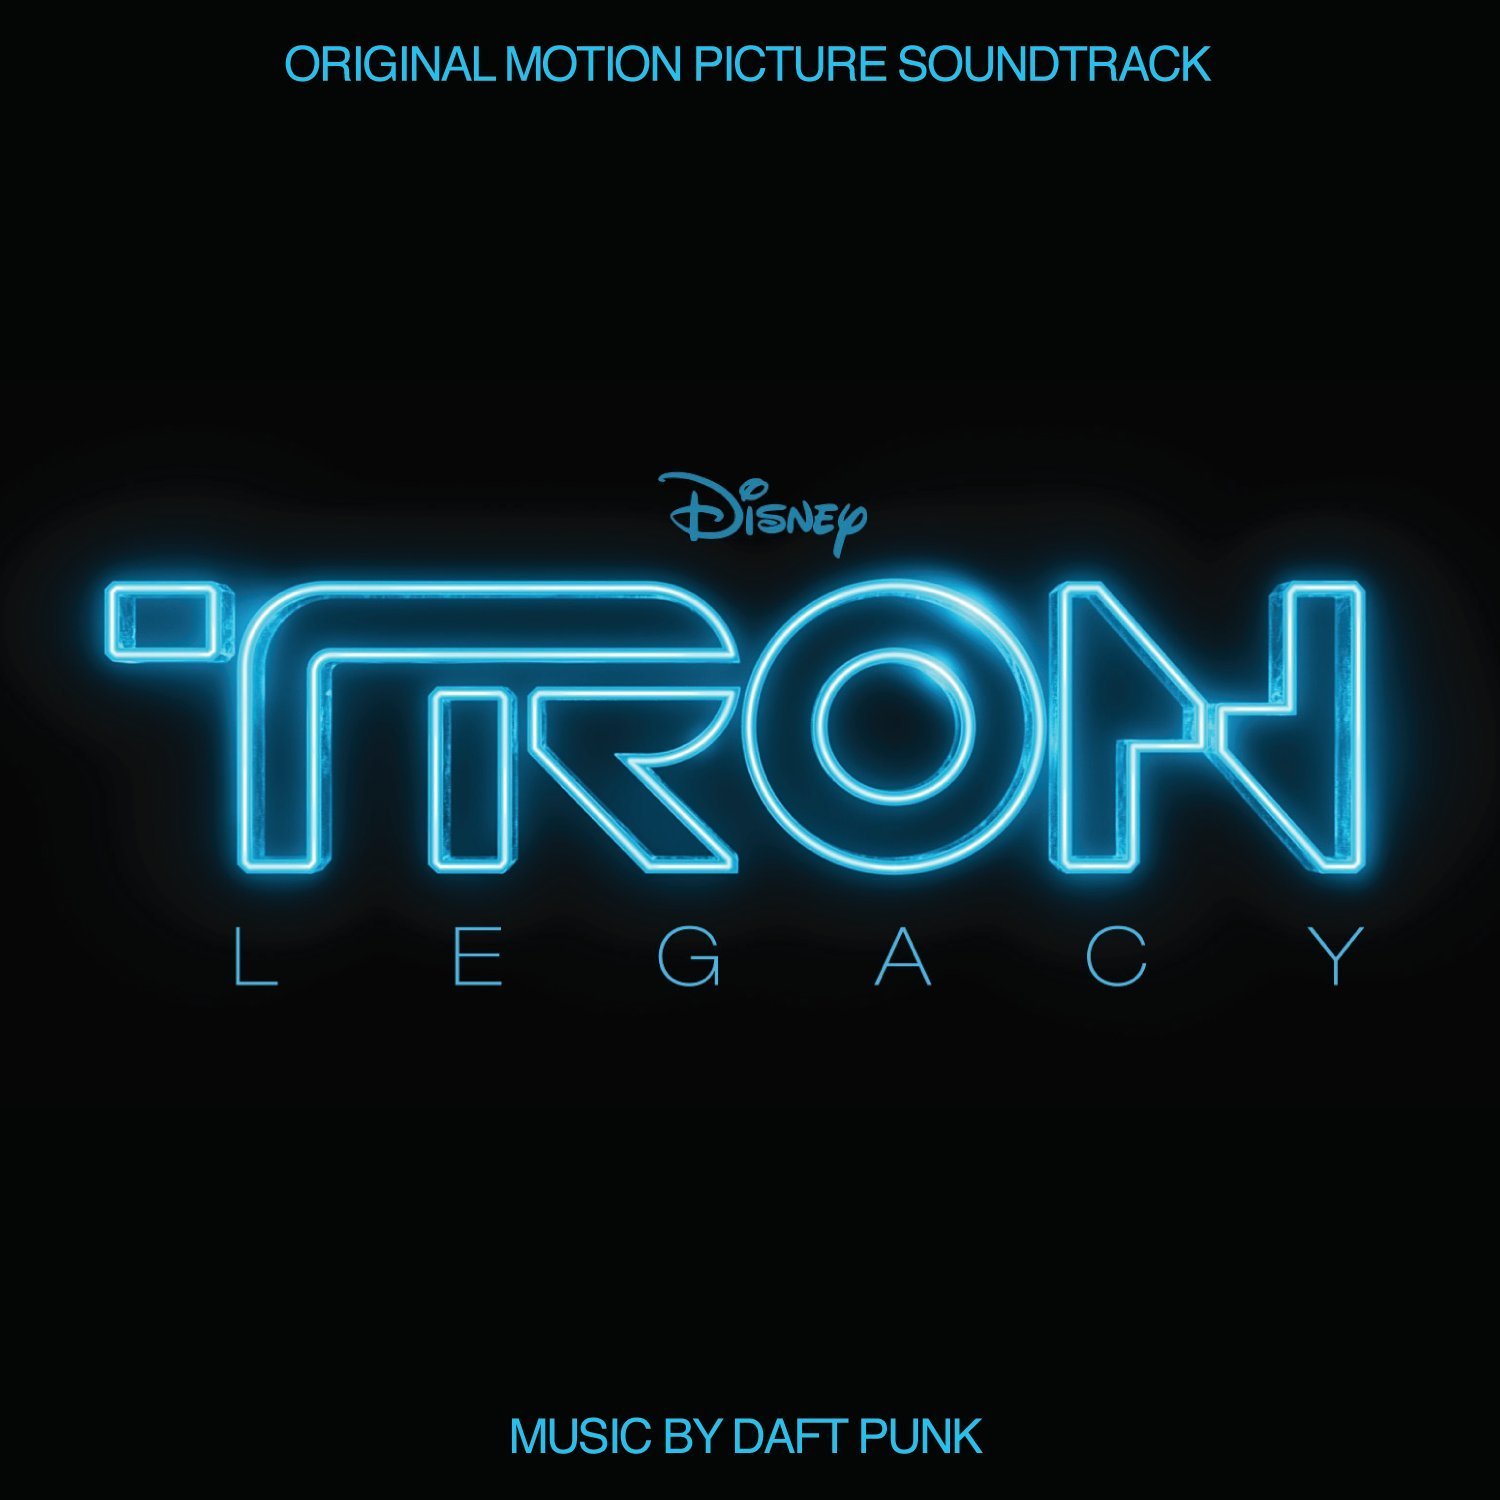 tron legacy soundtrack derezzed remix